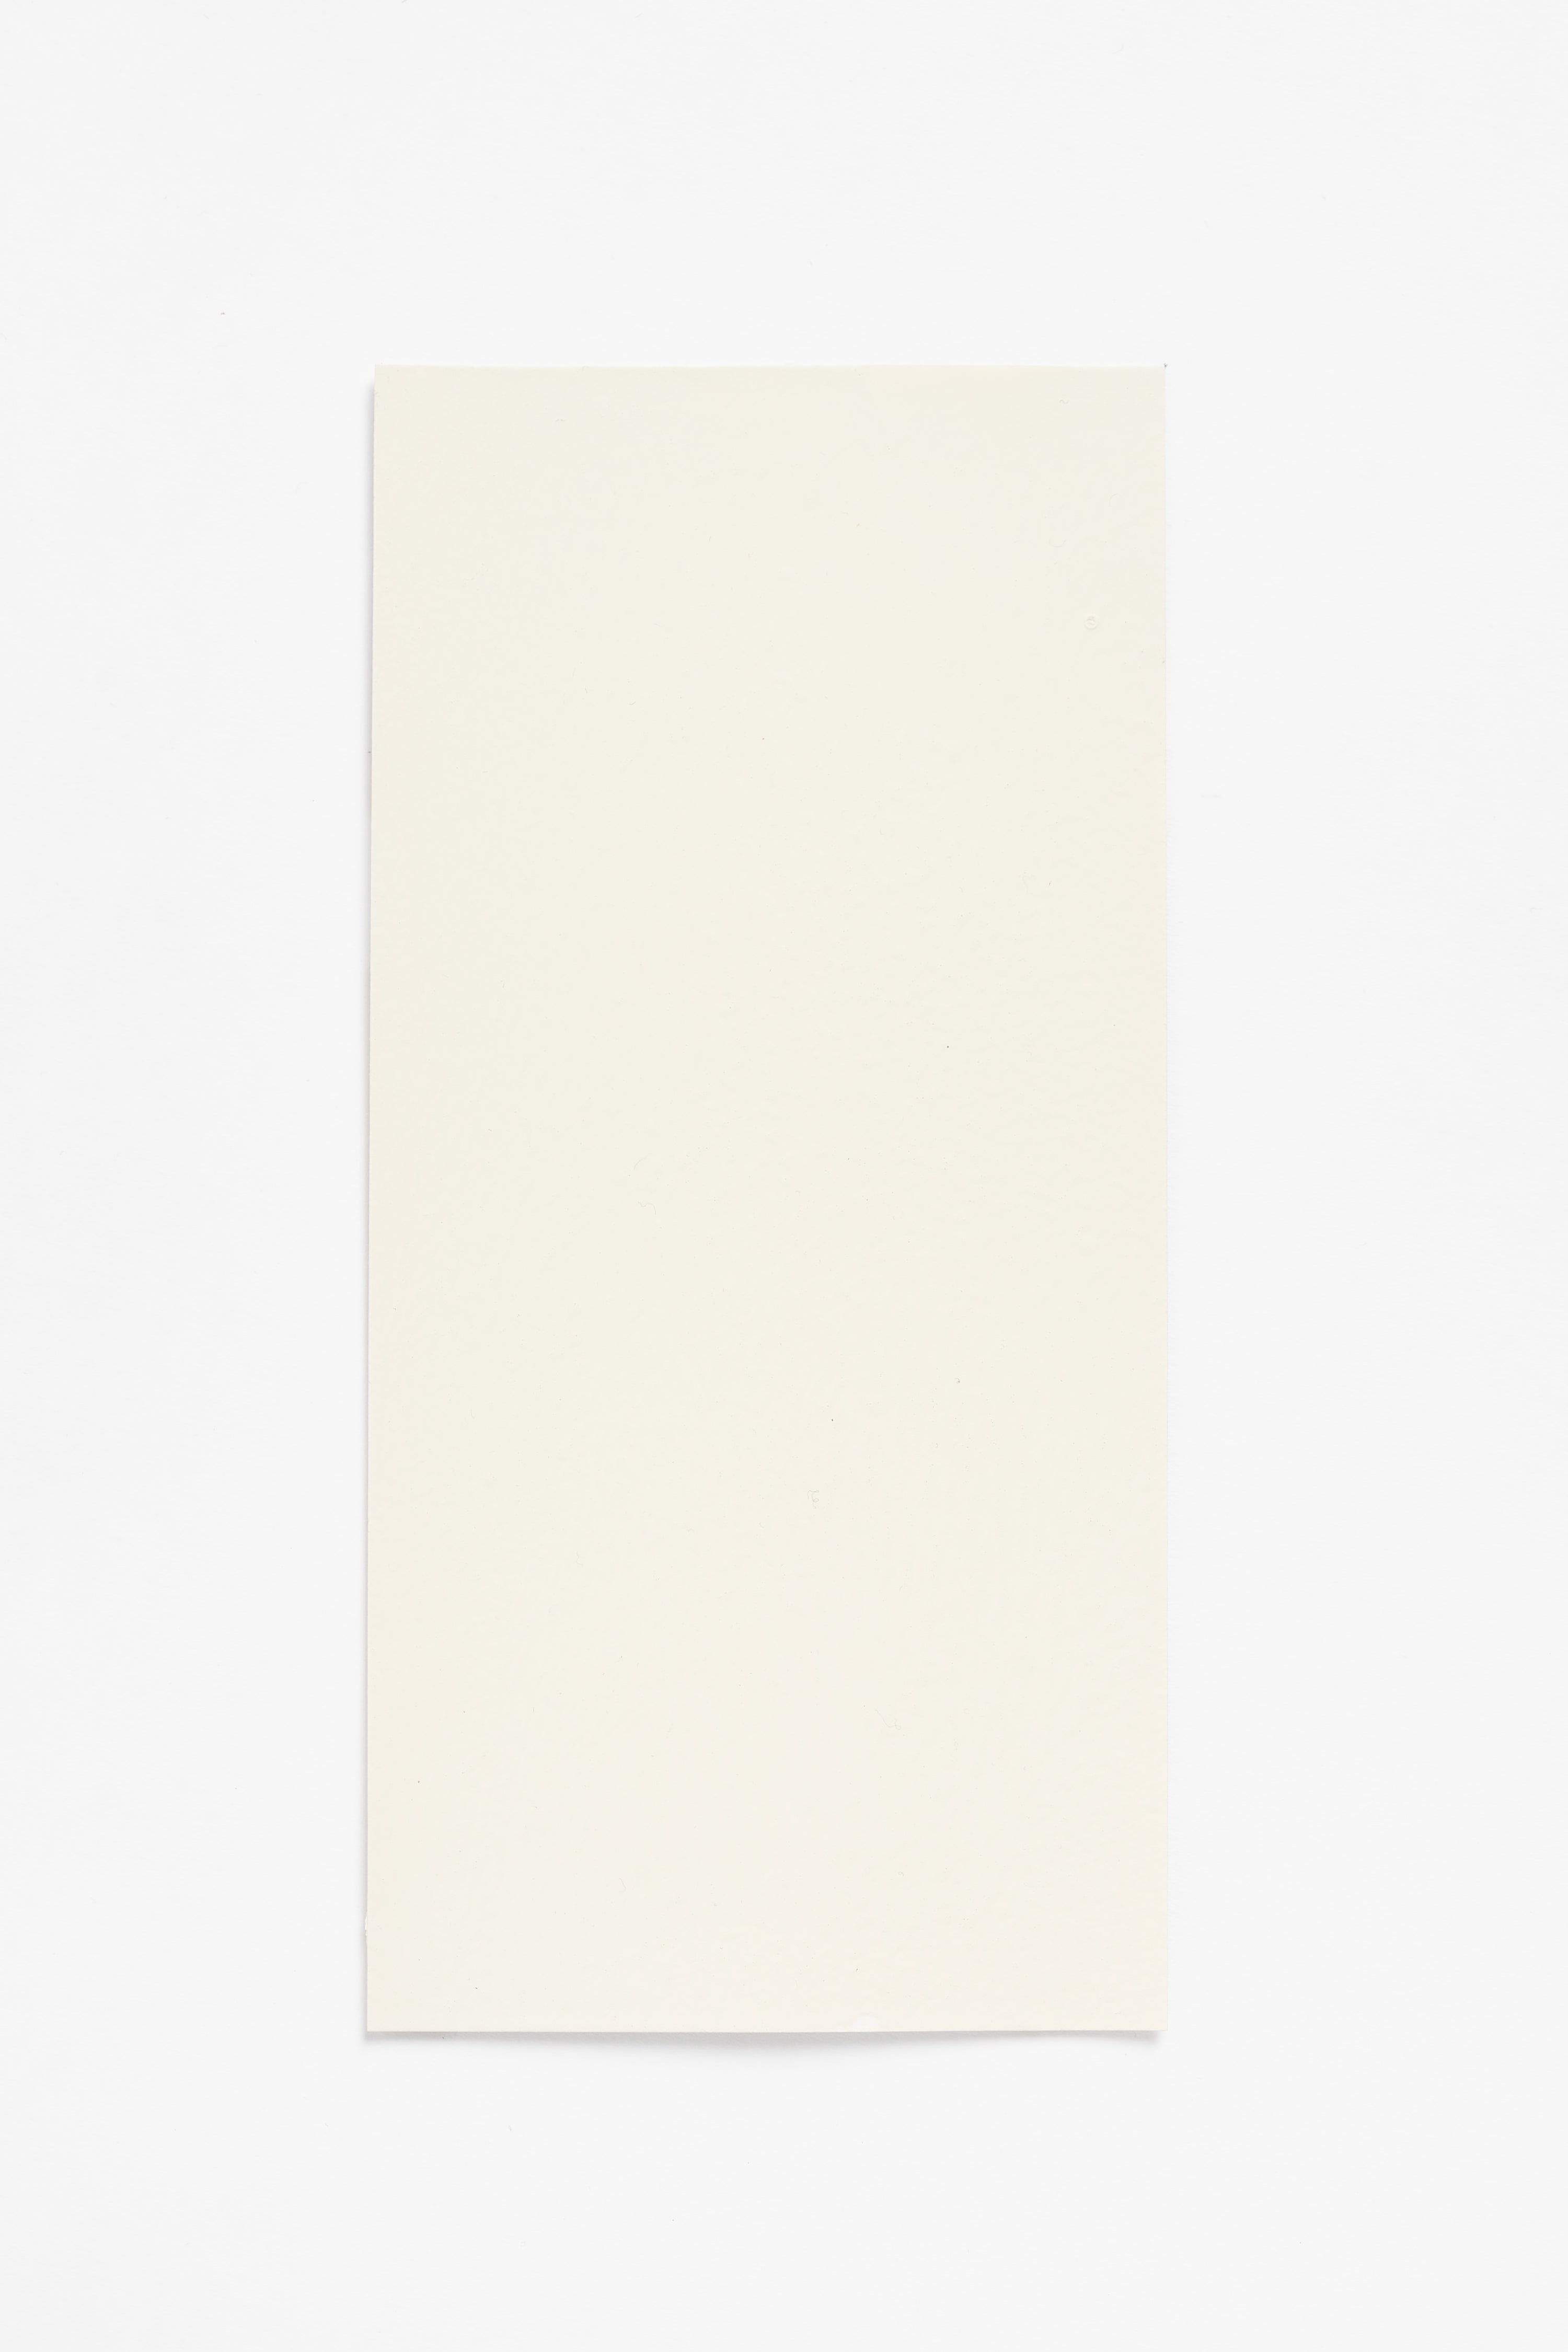 Almond — a paint colour developed by John Pawson for Blēo